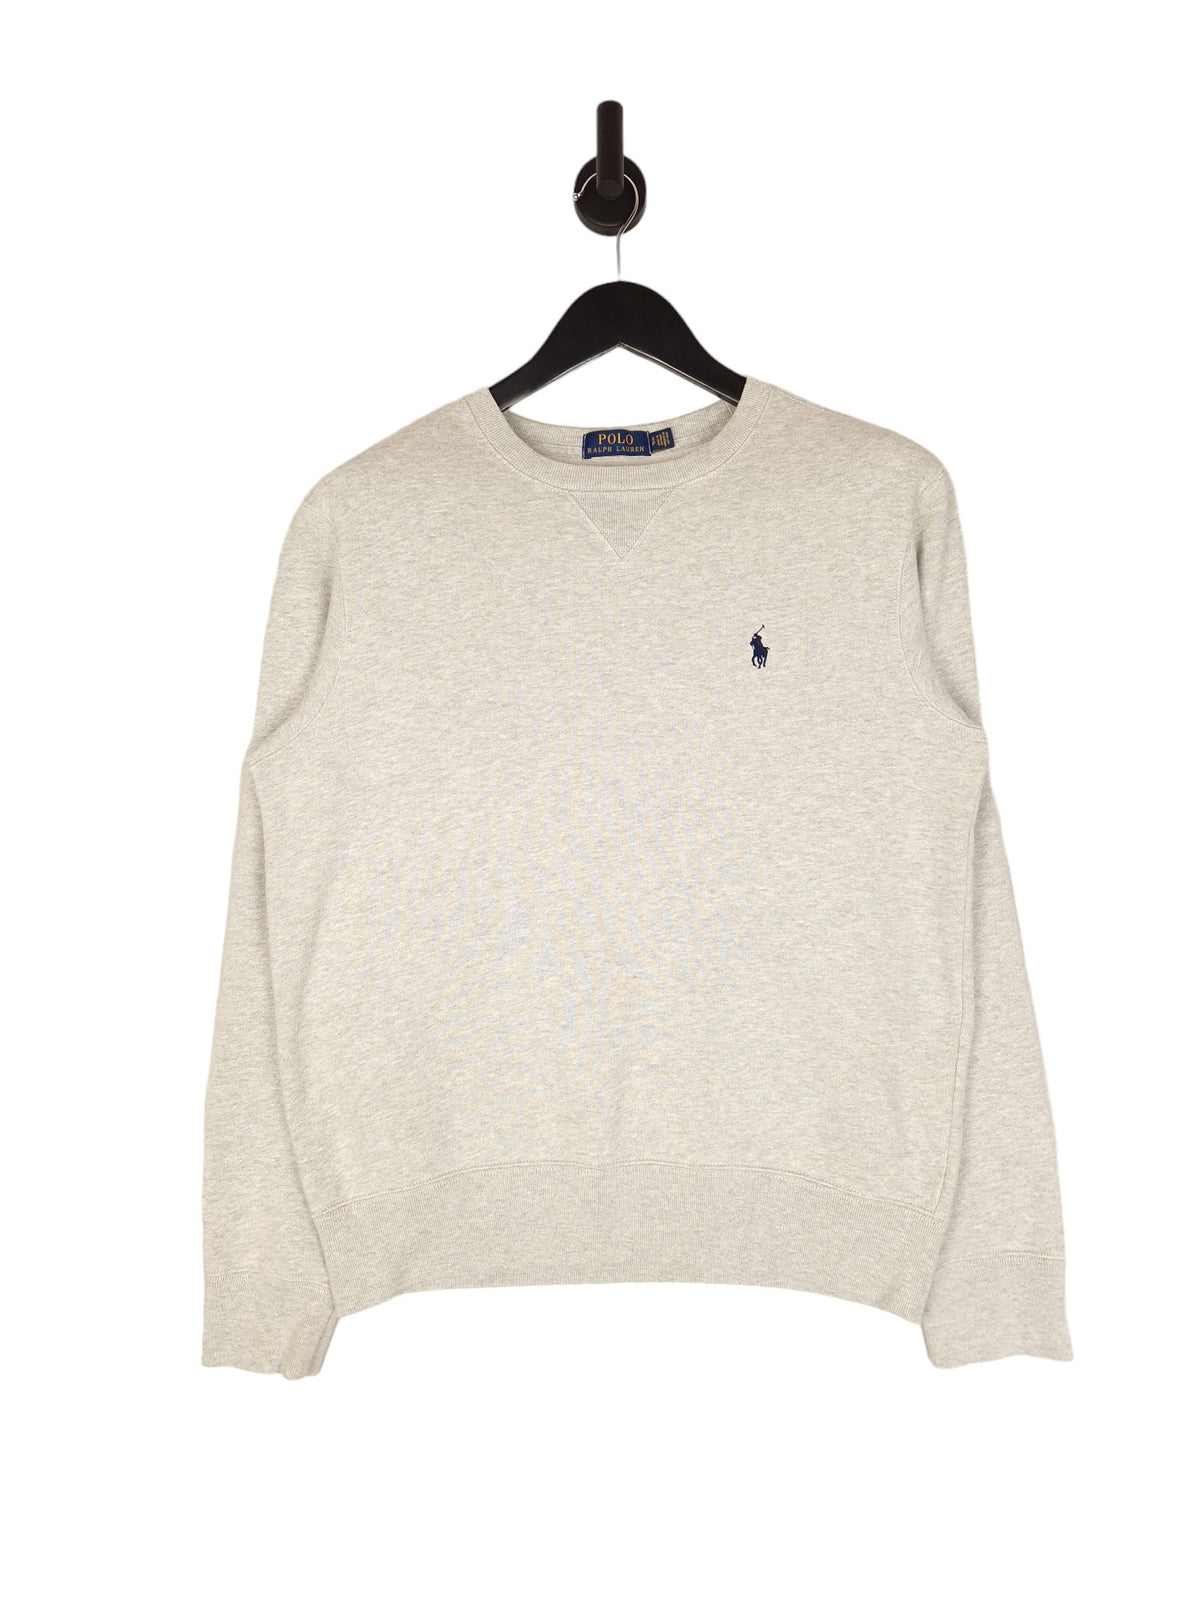 Polo Ralph Lauren Sweatshirt - Size Small